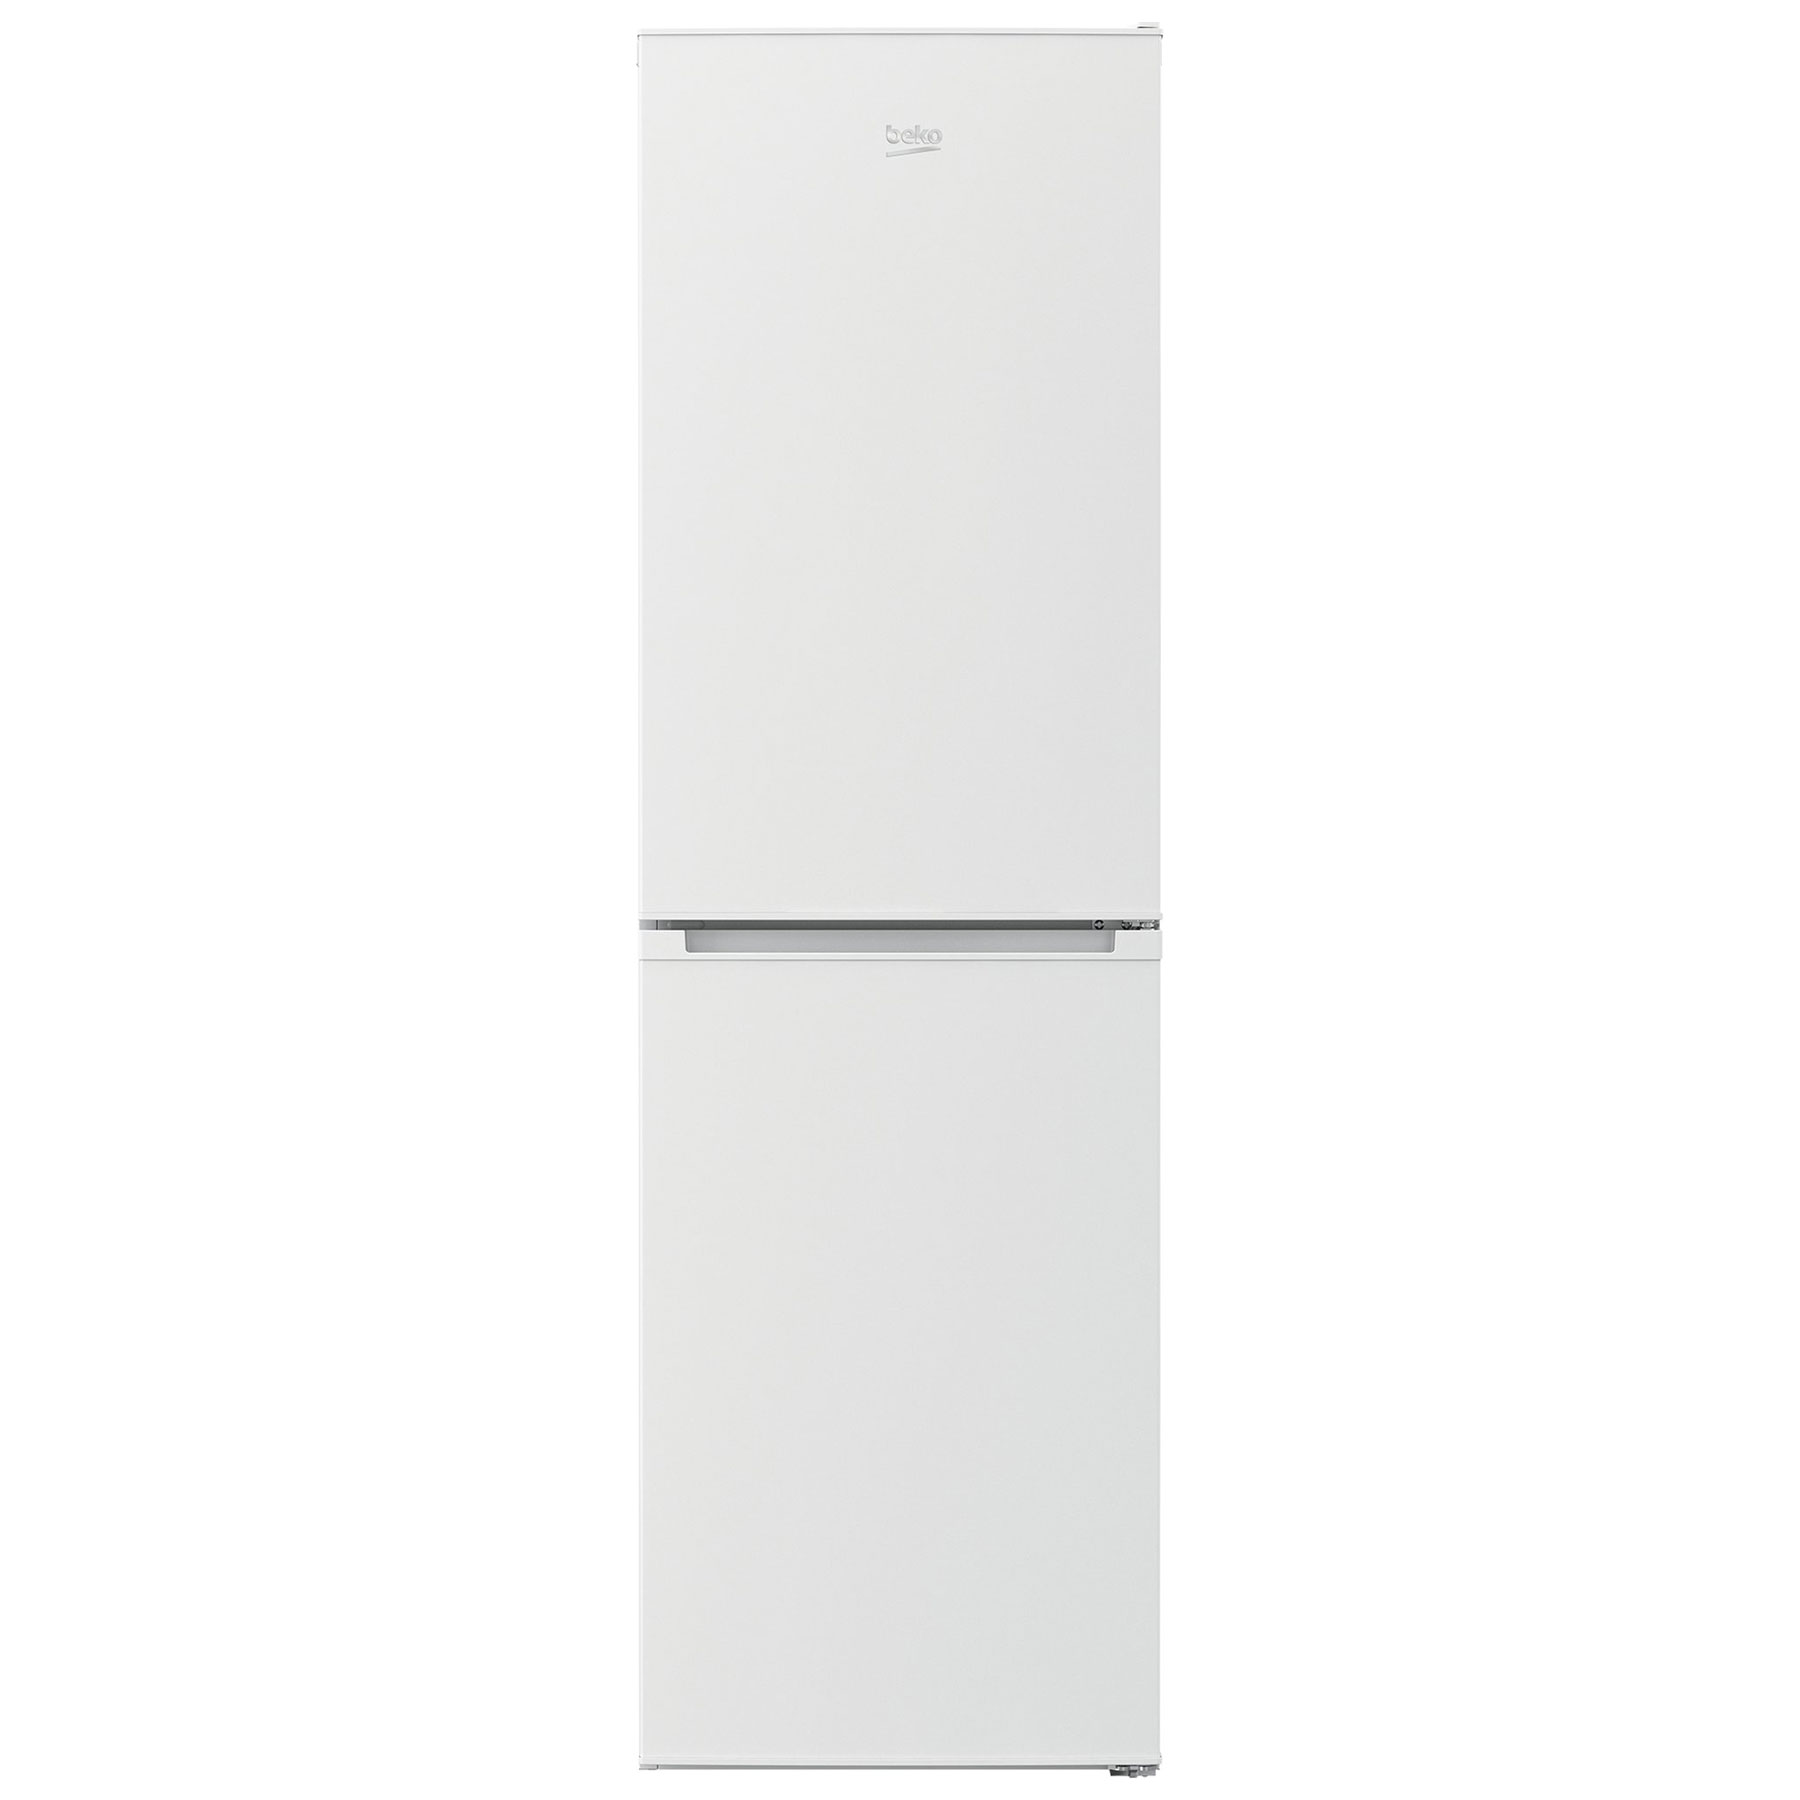 Image of Beko CCFM4582W 54cm Frost Free Fridge Freezer in White 1 82m E Rated